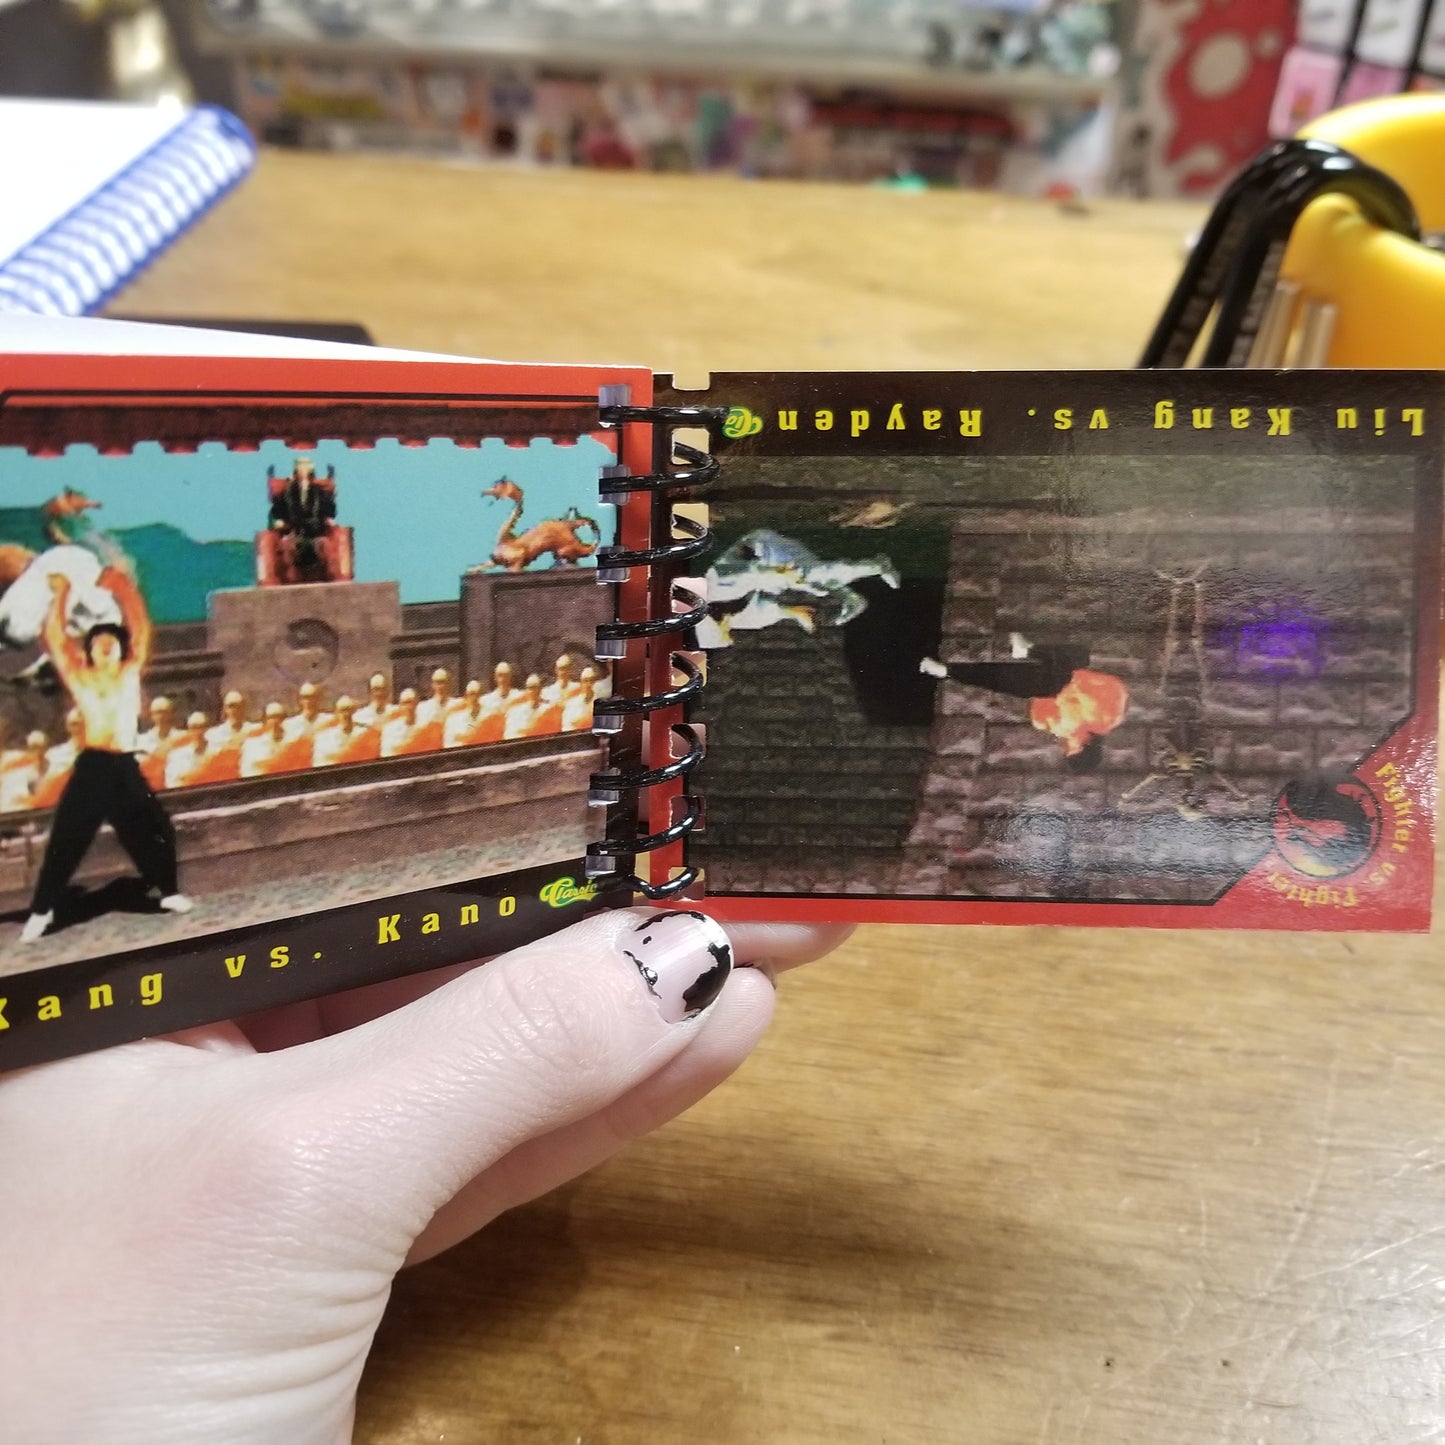 Upcycled Mortal K Mini Trading Card NOTEBOOKs